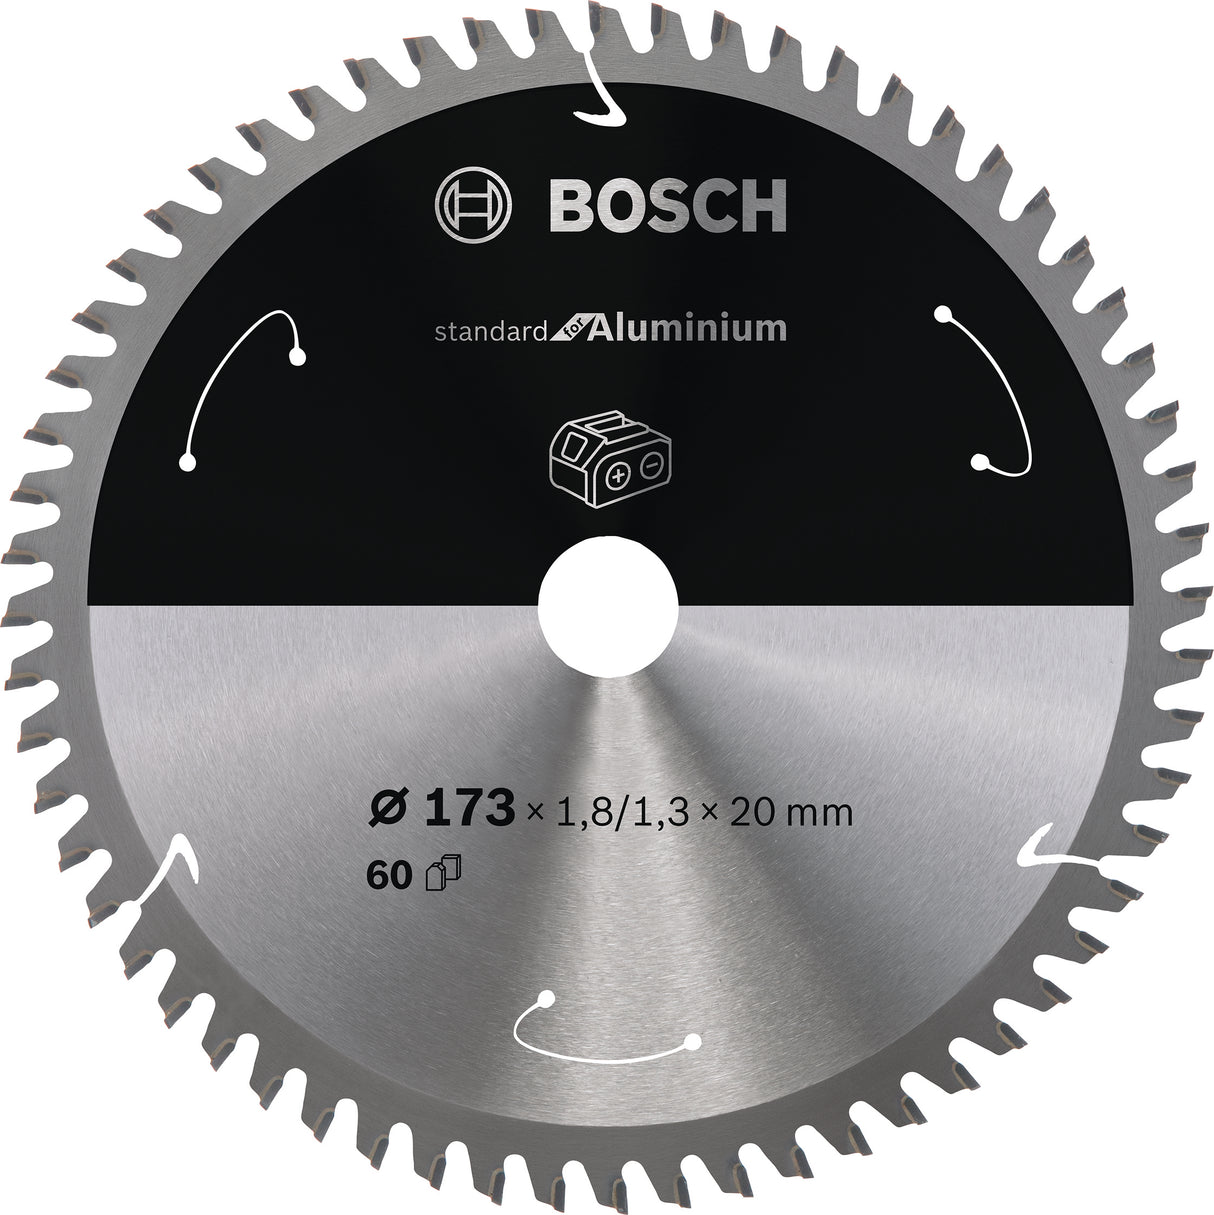 Bosch Professional Aluminium Circular Saw Blade for Cordless Saws - 173x1.8/1.3x20 T60 - Standard